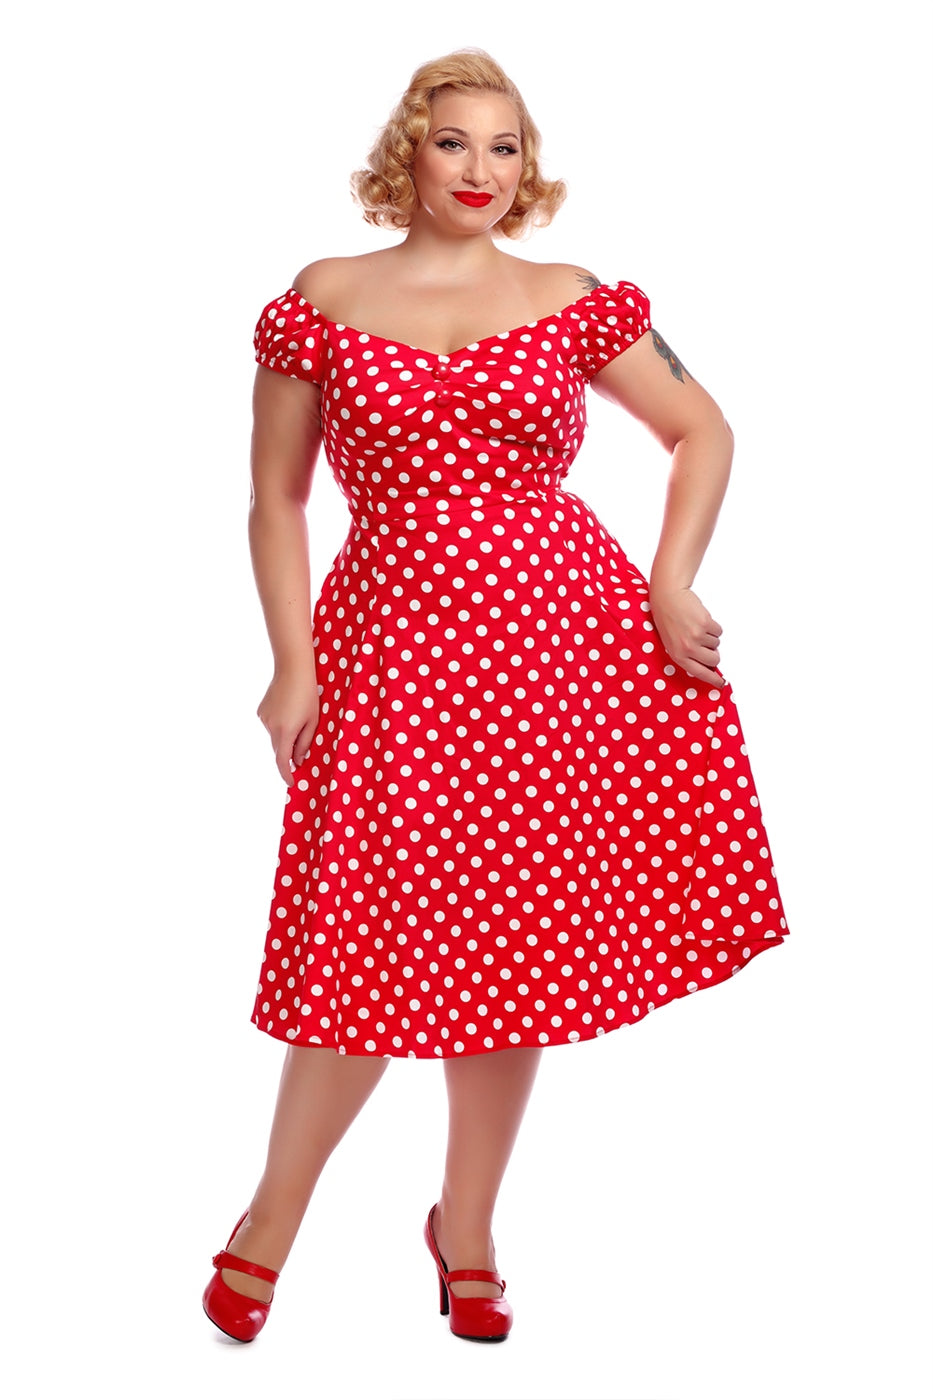 vintage pin up blonde model wearing an off the shoulder red md length dress wit white polka dots